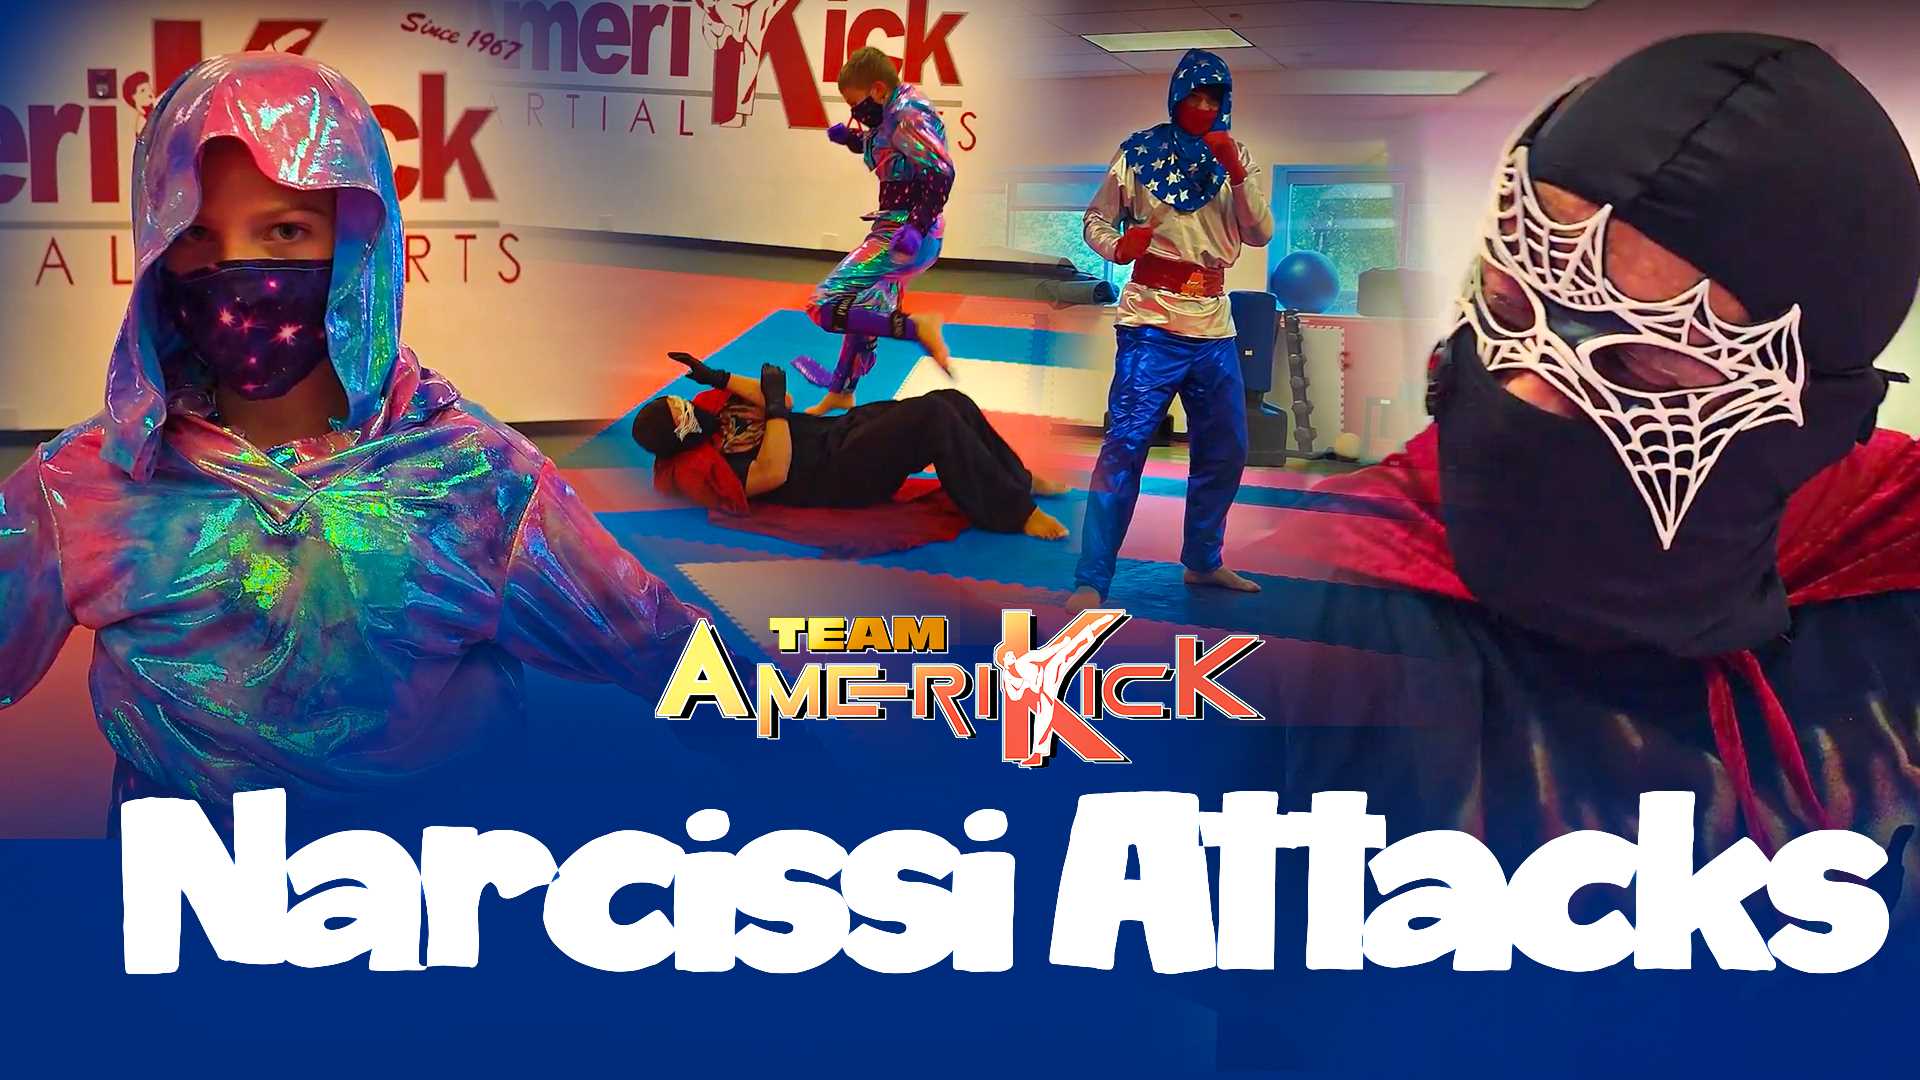 Amerikick Action | Team AmeriKick: NARCISSI ATTACKS!